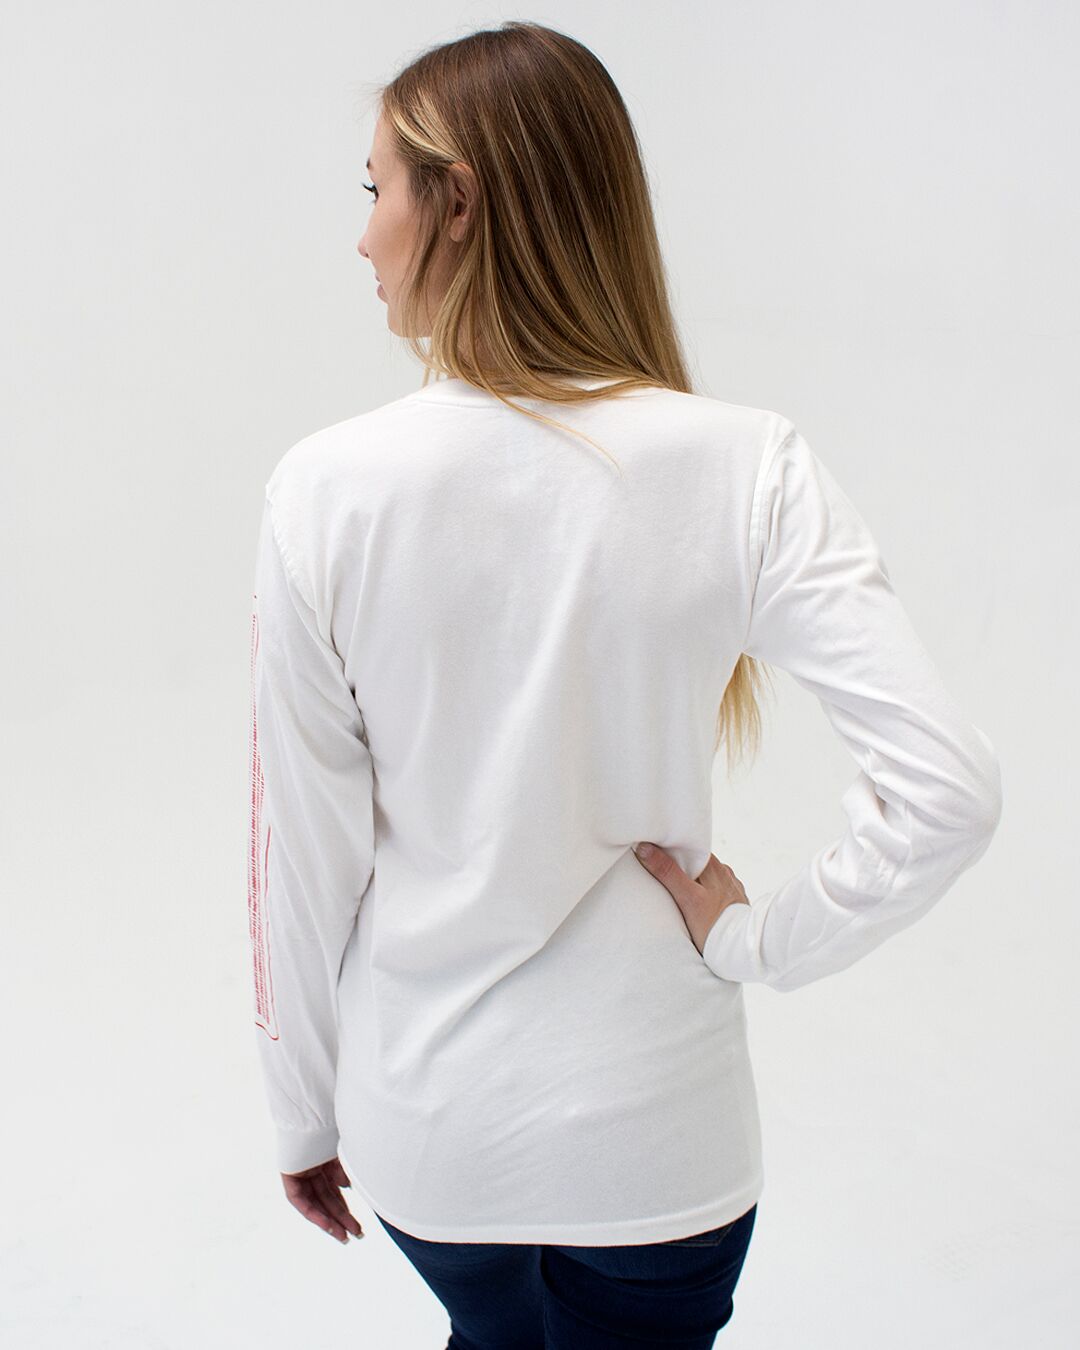 t. Weeyn Heart on sleeve binary code women's shirt back view